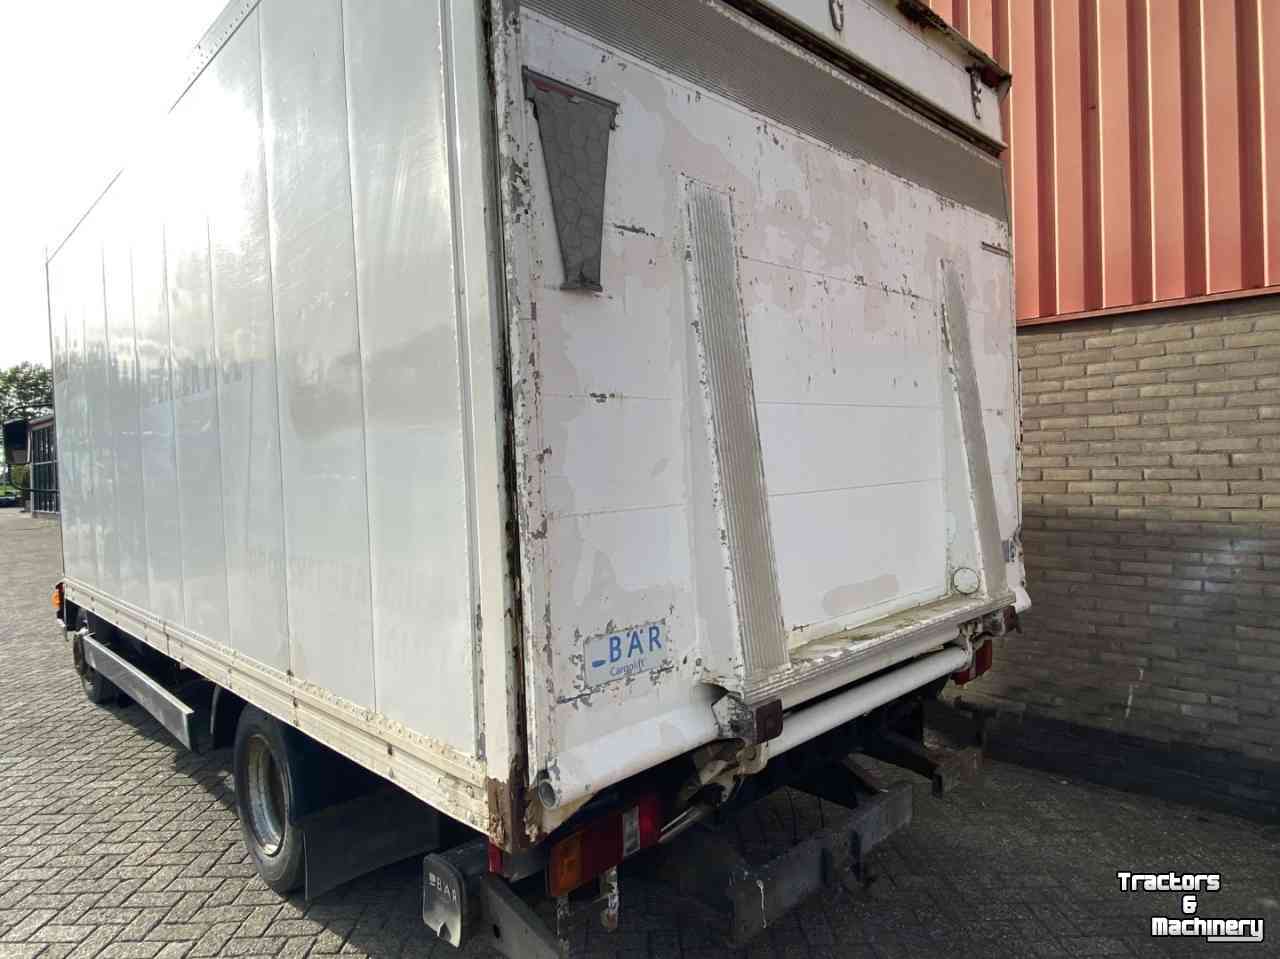 Vrachtwagen MAN L2000, vrachtwagen